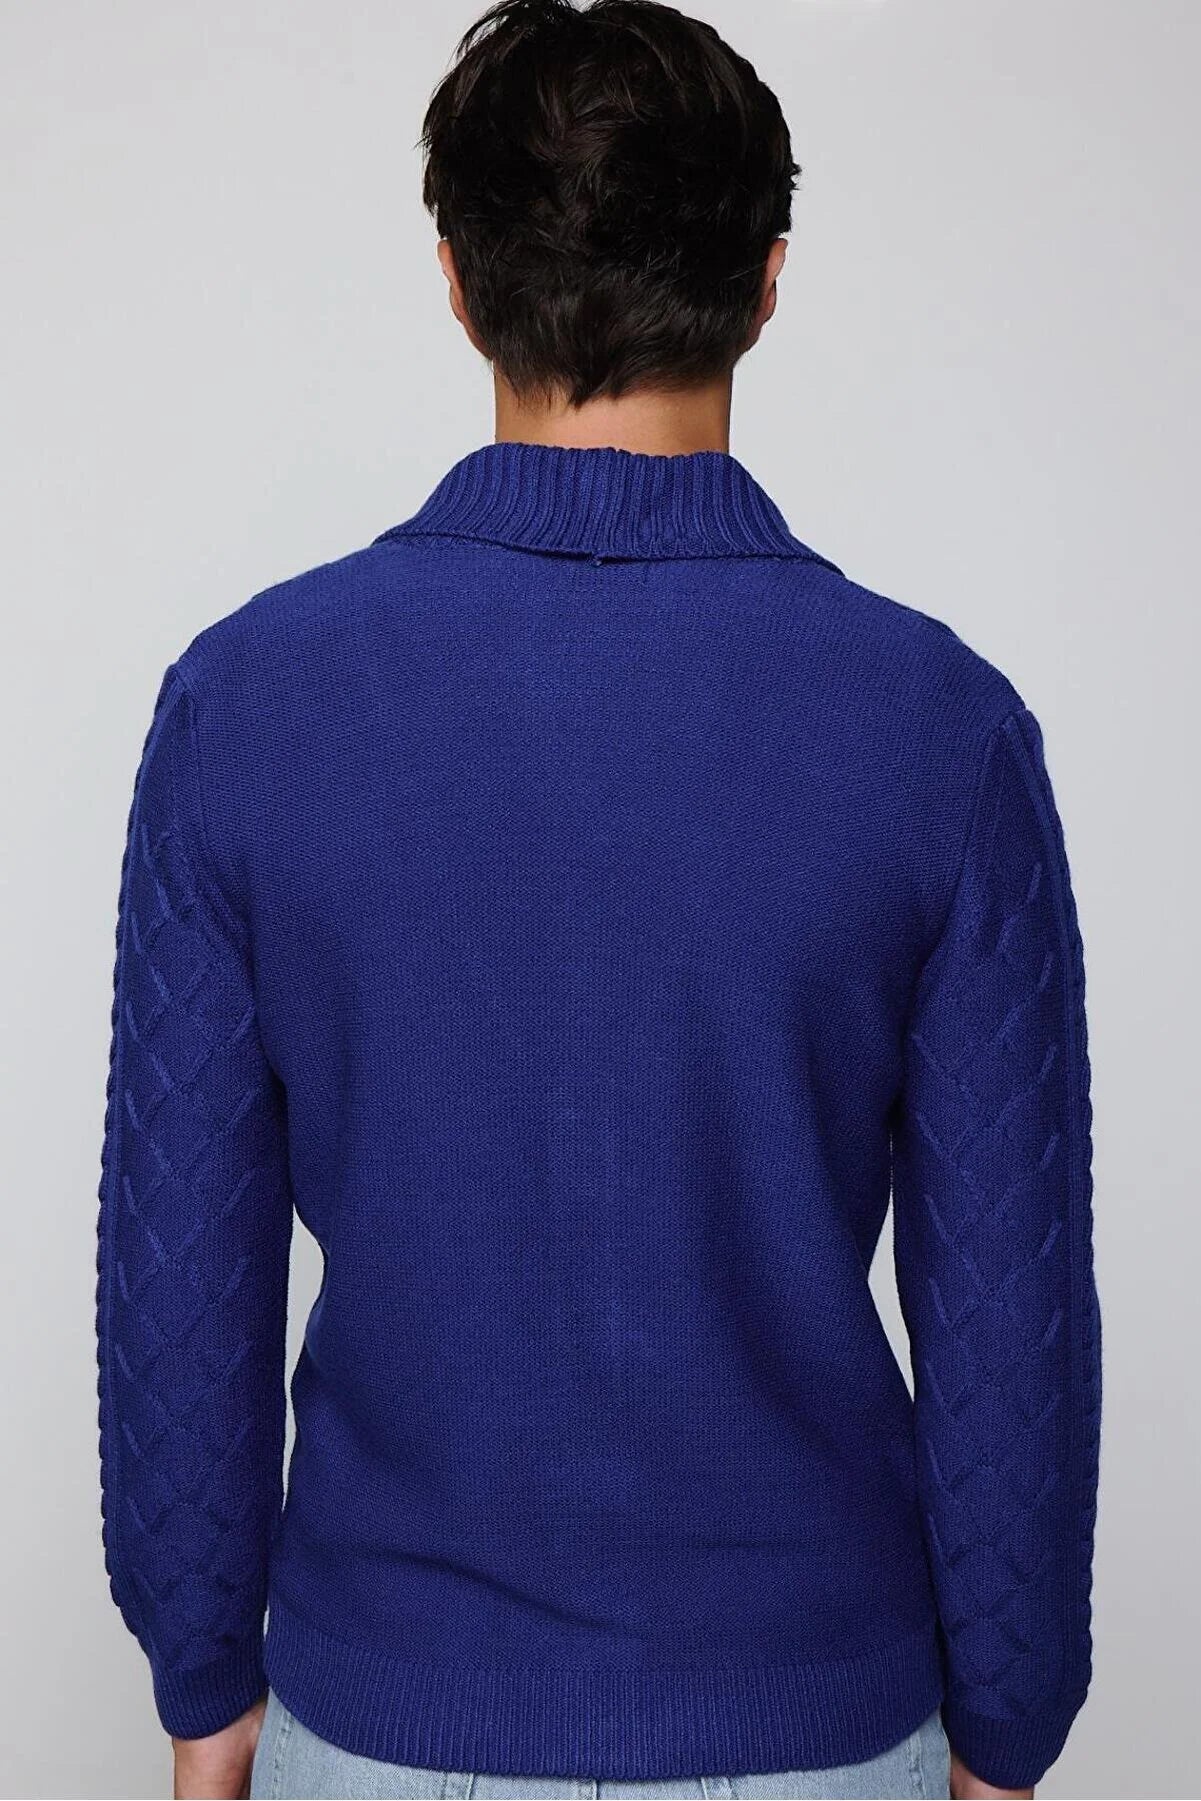 Slim Fit Patterned Soft Textured Buttoned Blue Men's Cardigan